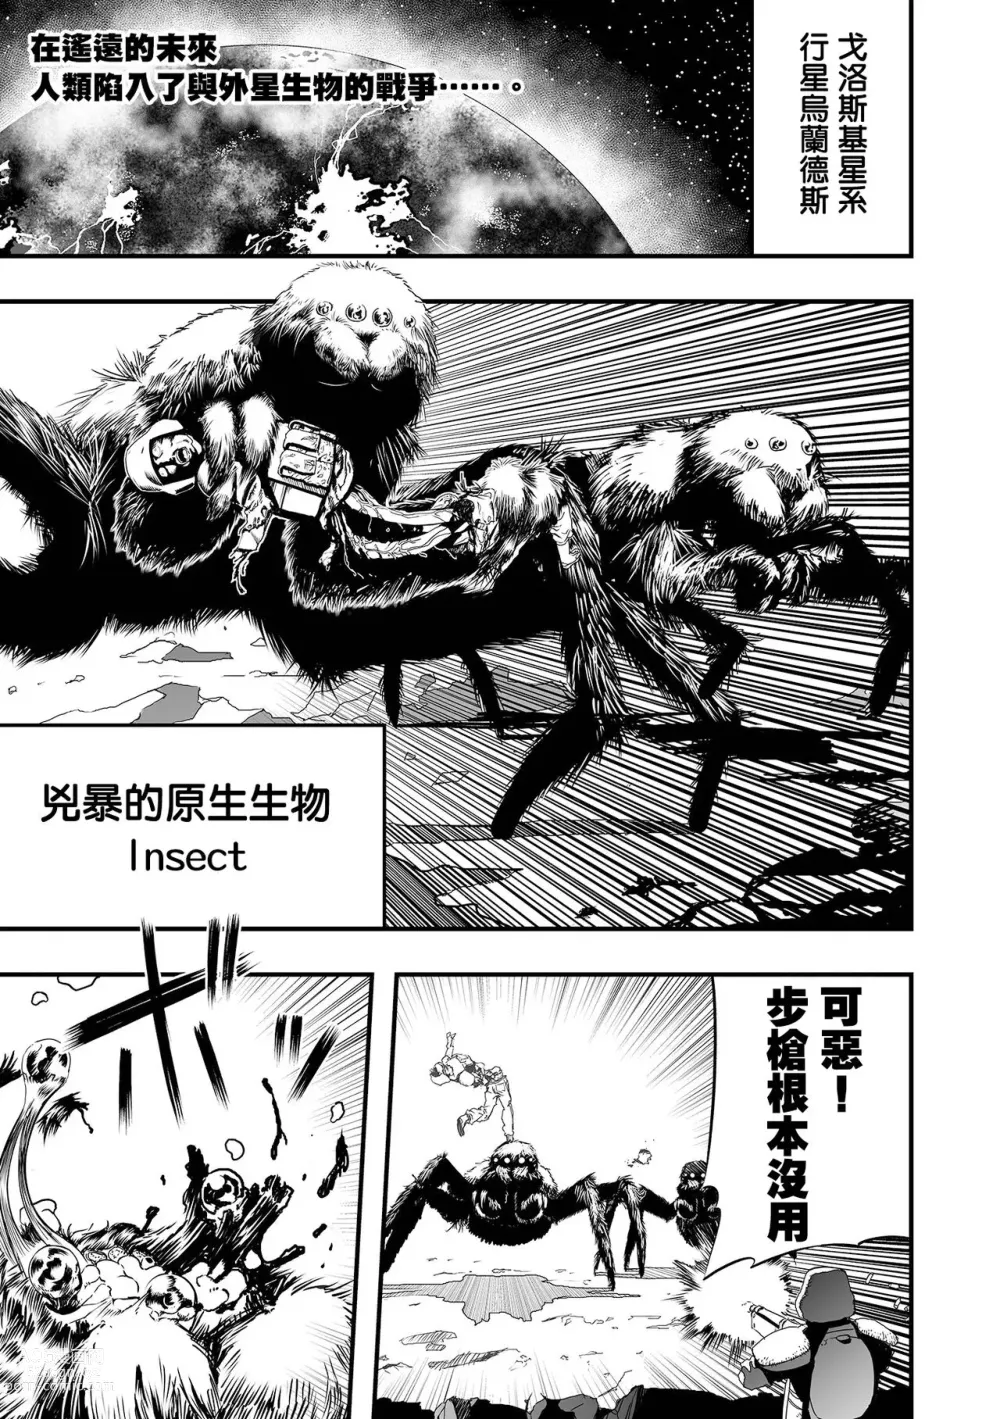 Page 2 of manga 防彈帶士兵團